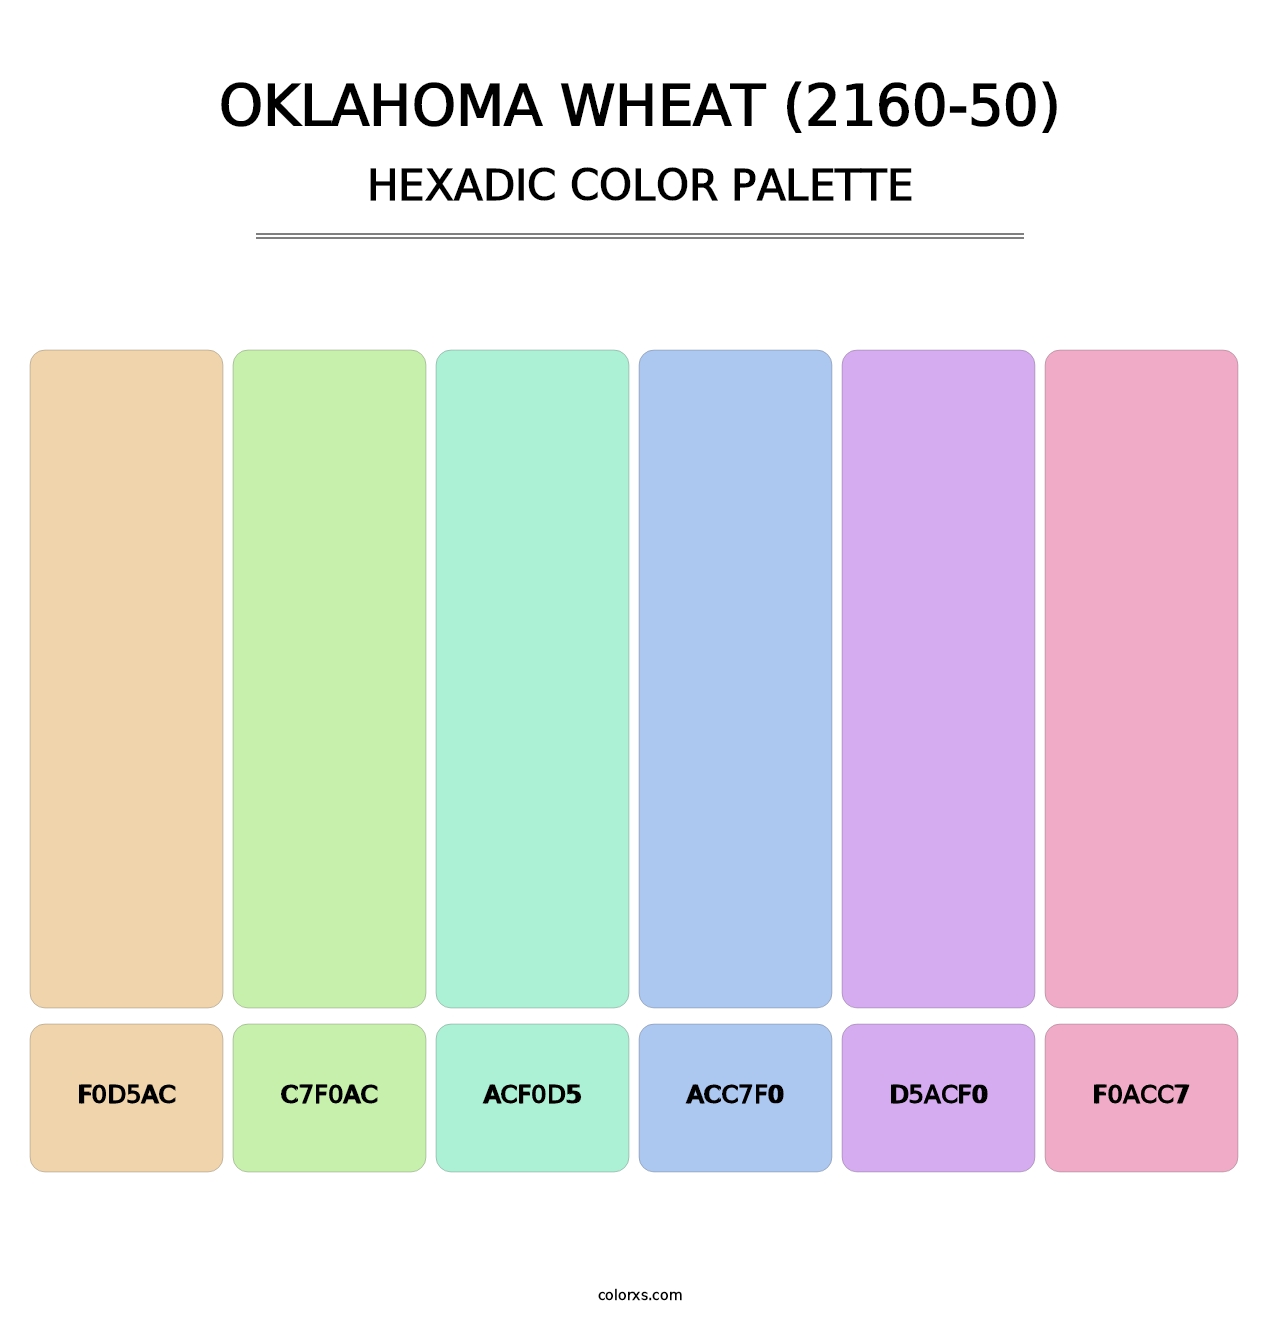 Oklahoma Wheat (2160-50) - Hexadic Color Palette